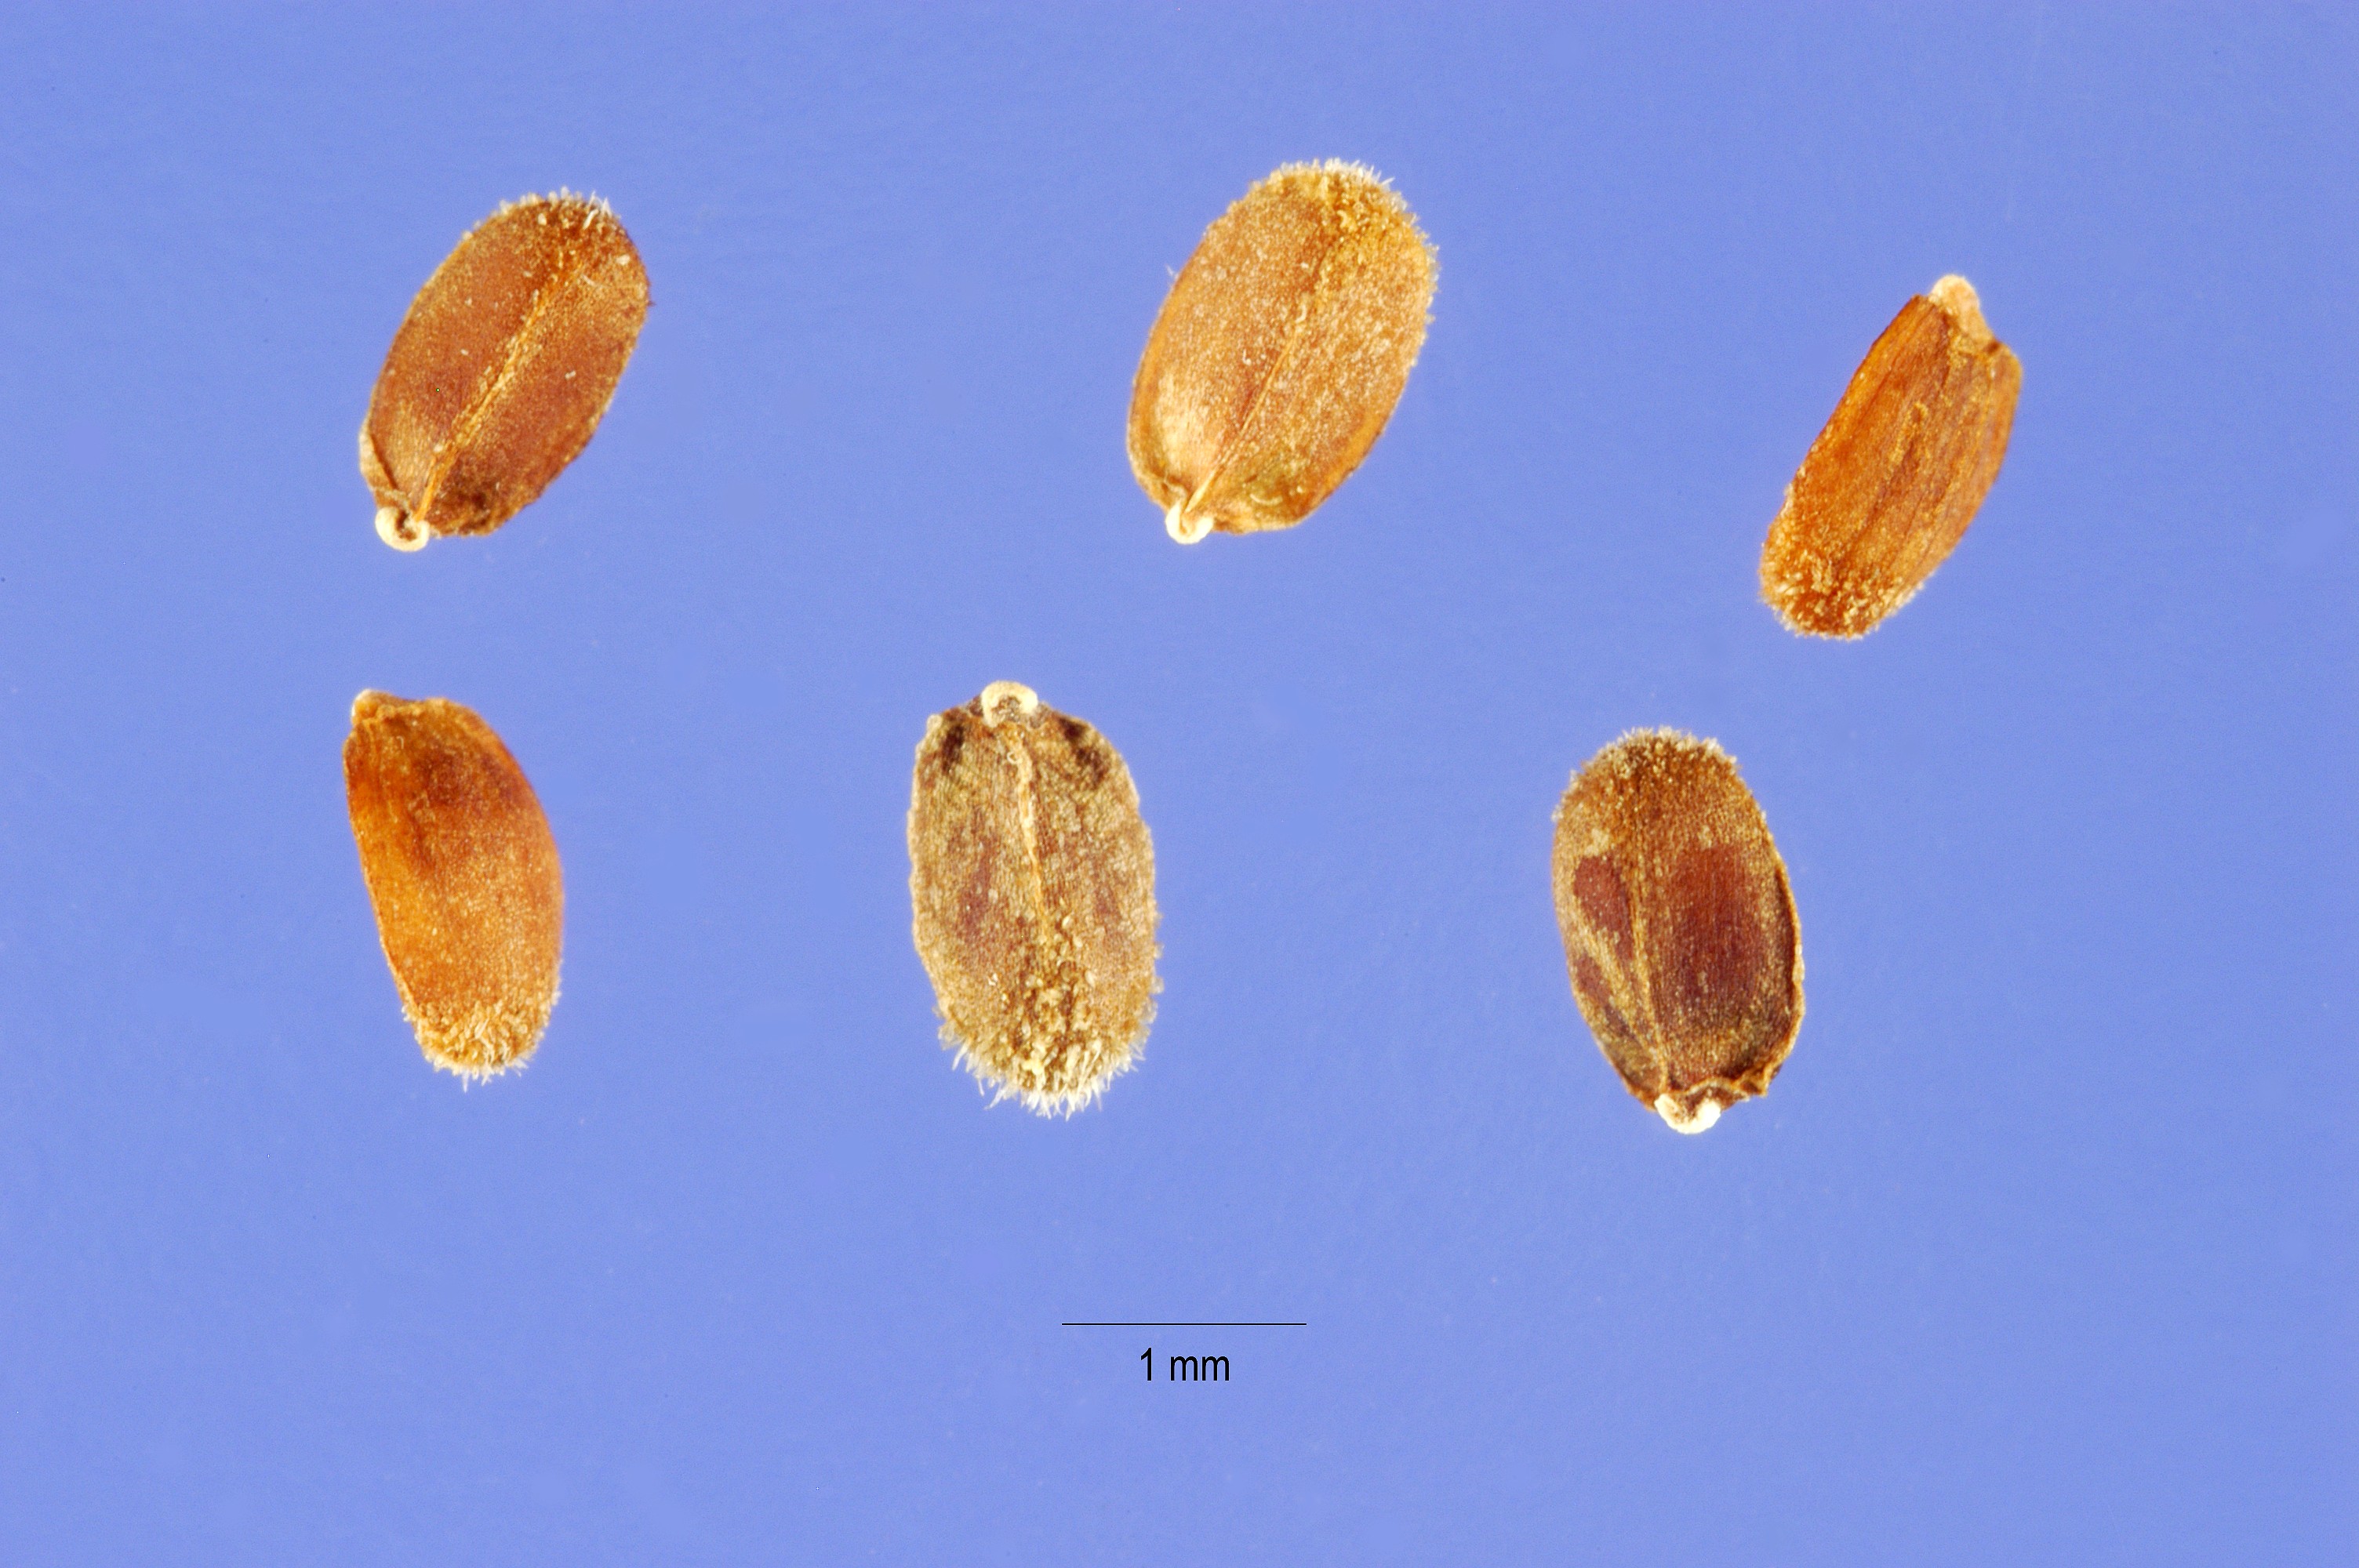 Agastache urticifolia seeds